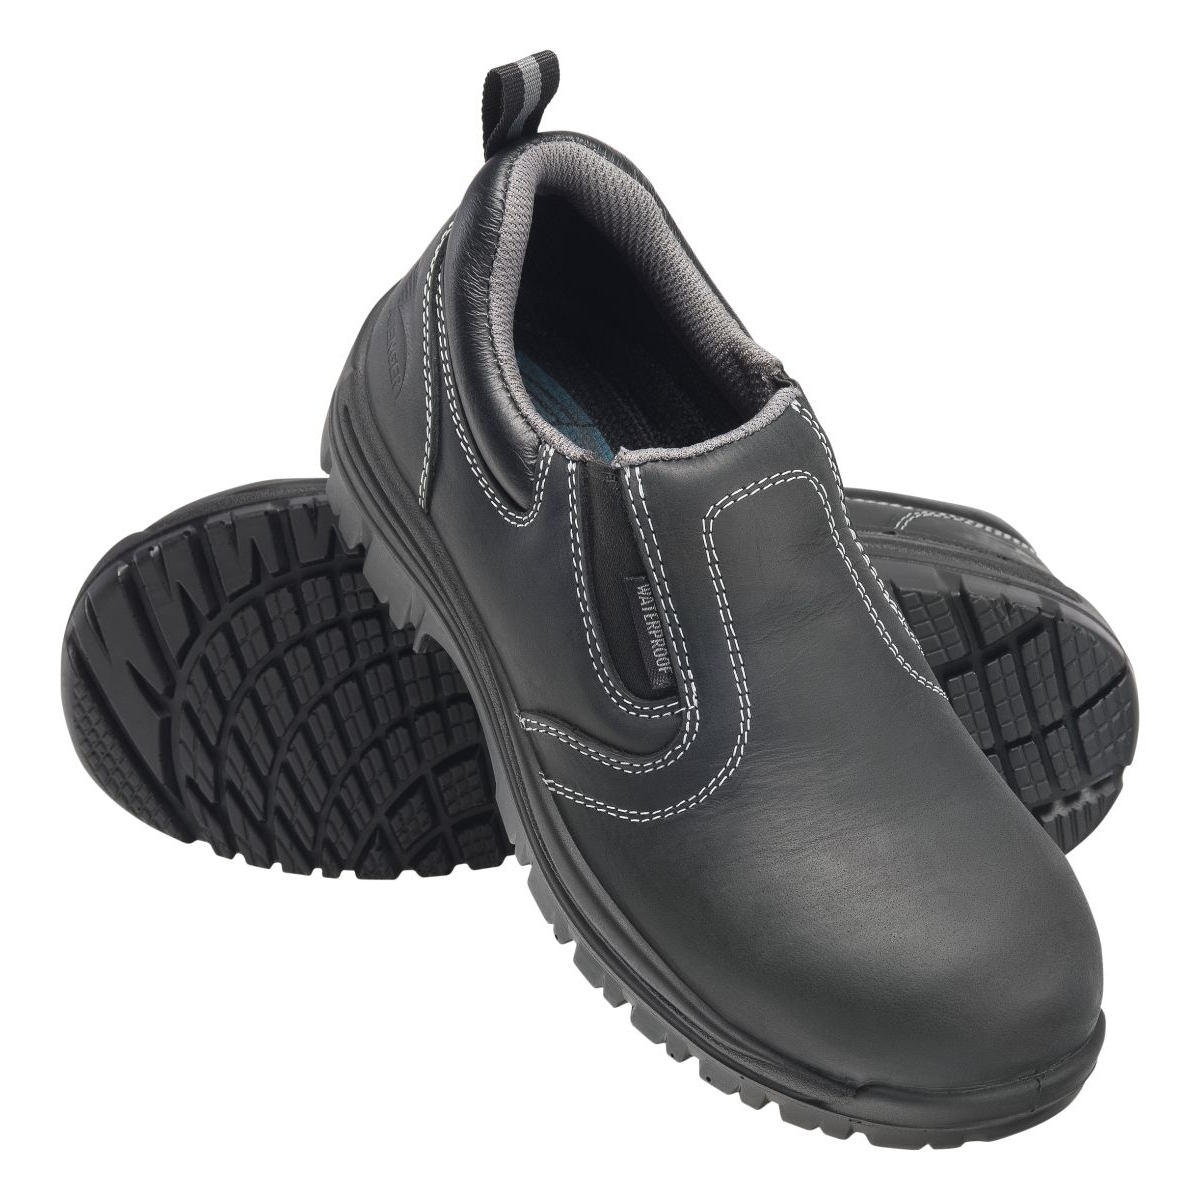 FSI FOOTWEAR SPECIALTIES INTERNATIONAL NAUTILUS Avenger Women's Foreman Slip-On Composite Toe PR Work Shoes Black - A7169 - BLACK, 9.5-M